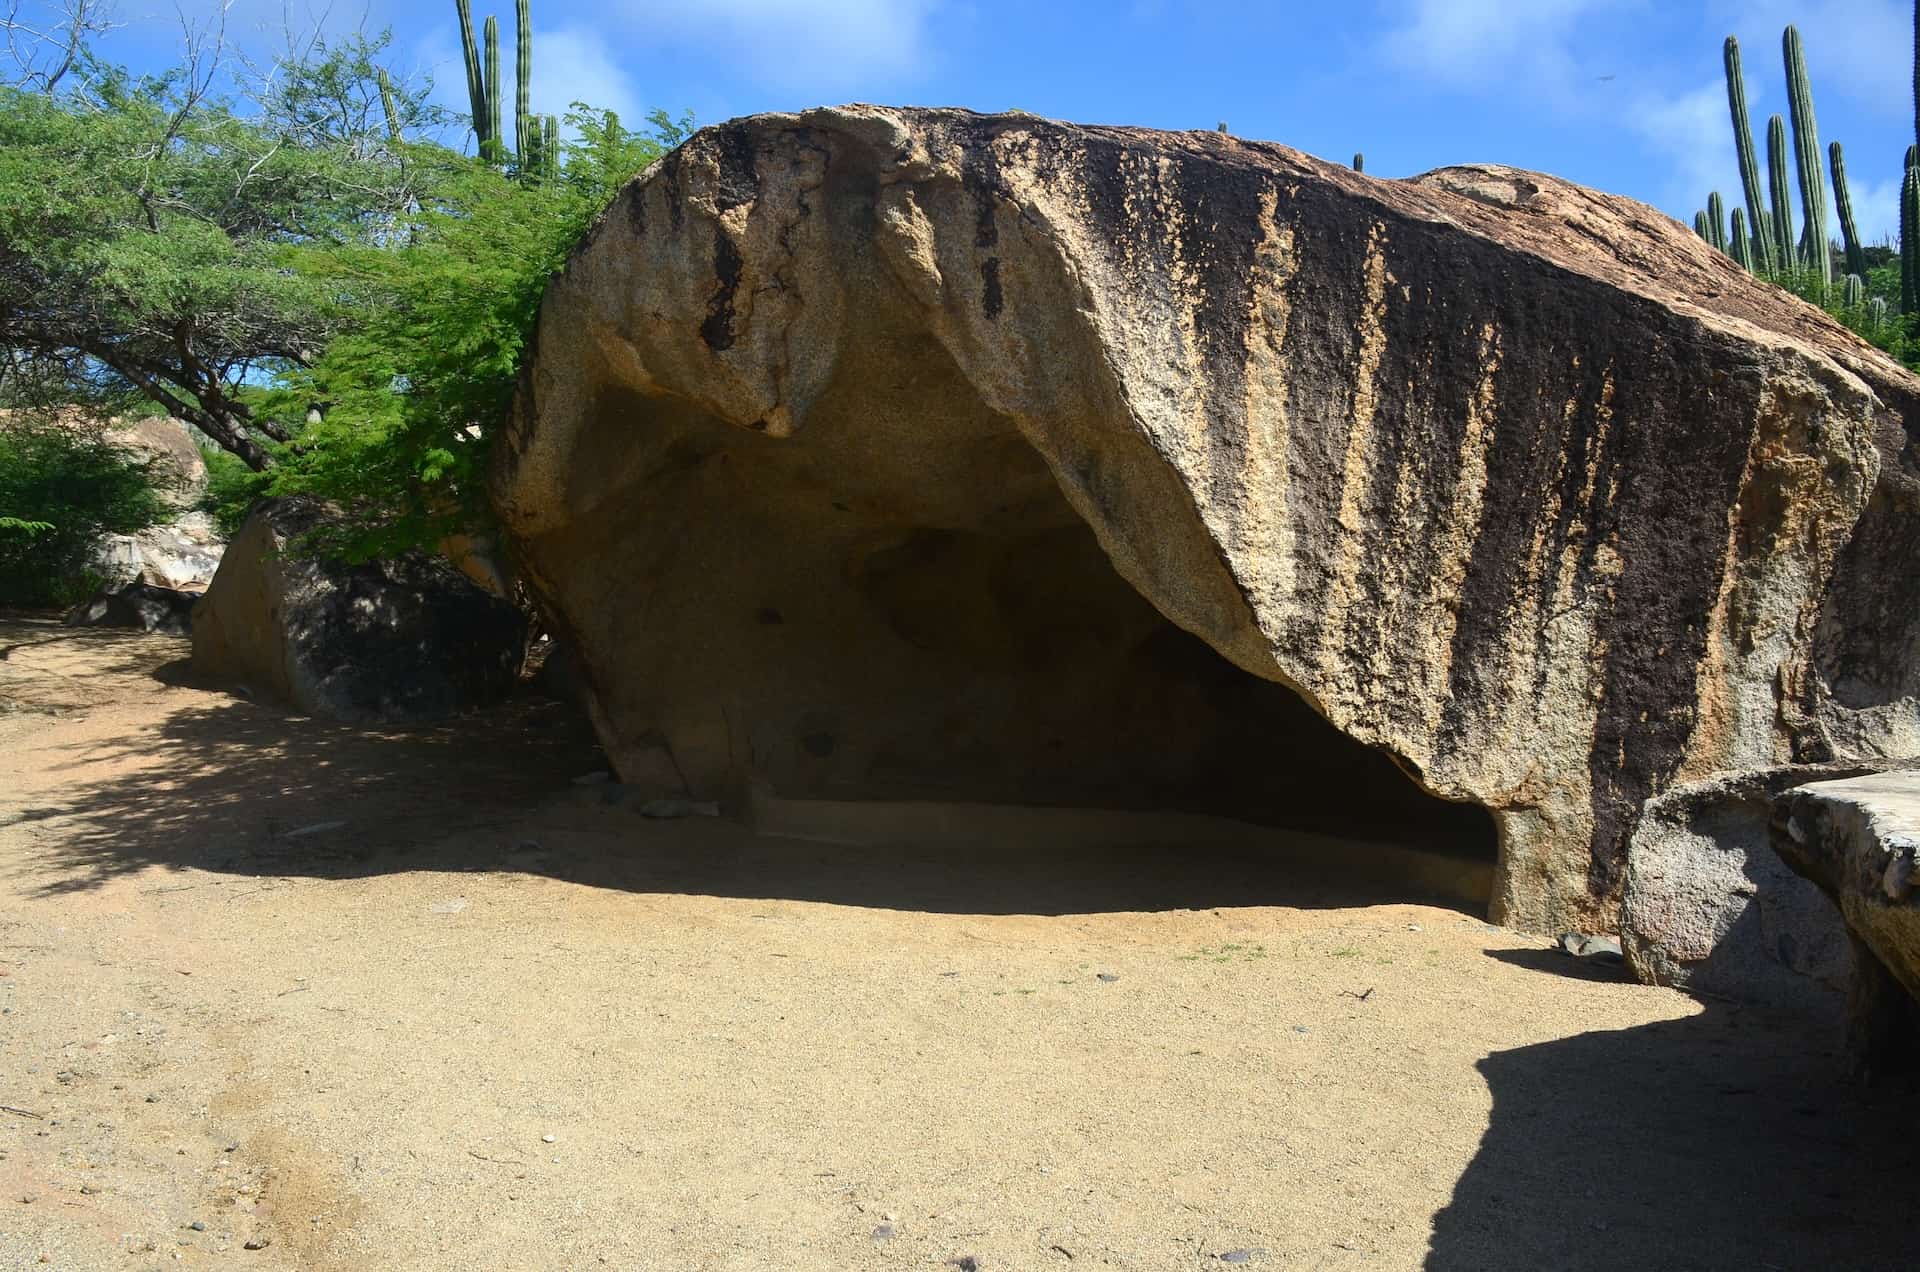 Rock with a natural shelter at the Ayo Rock Formations in Paradera, Aruba